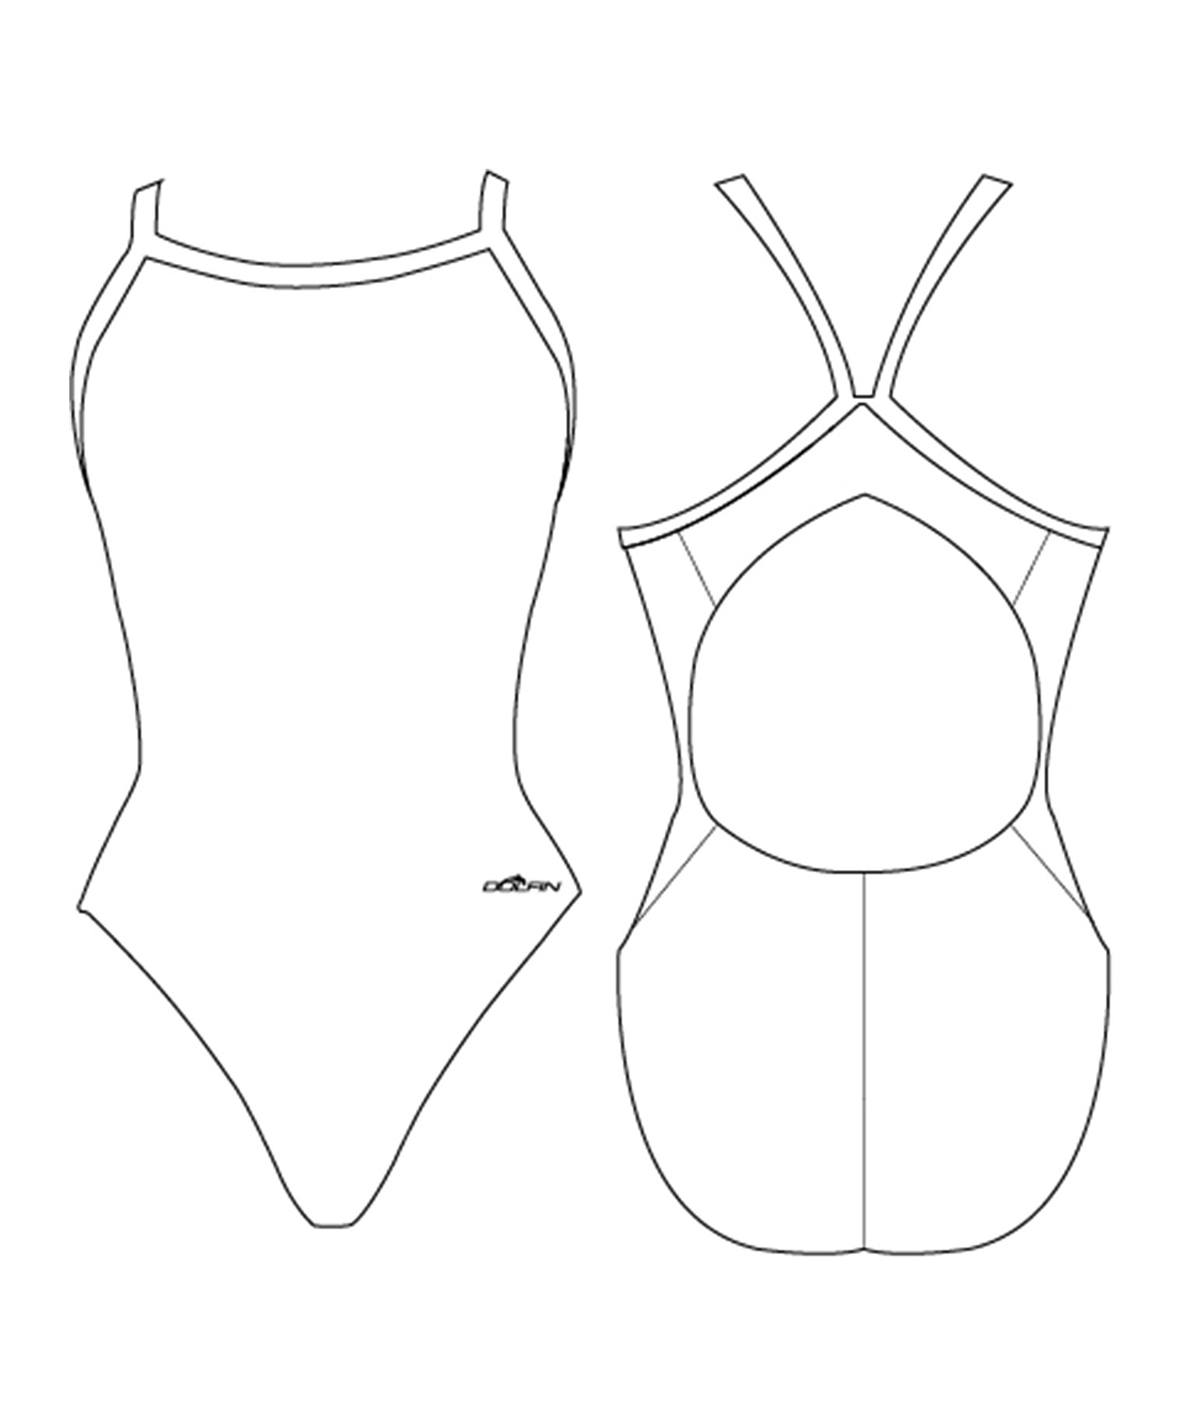 Women's Sublimated V-Back Back 1 Piece Swimsuit